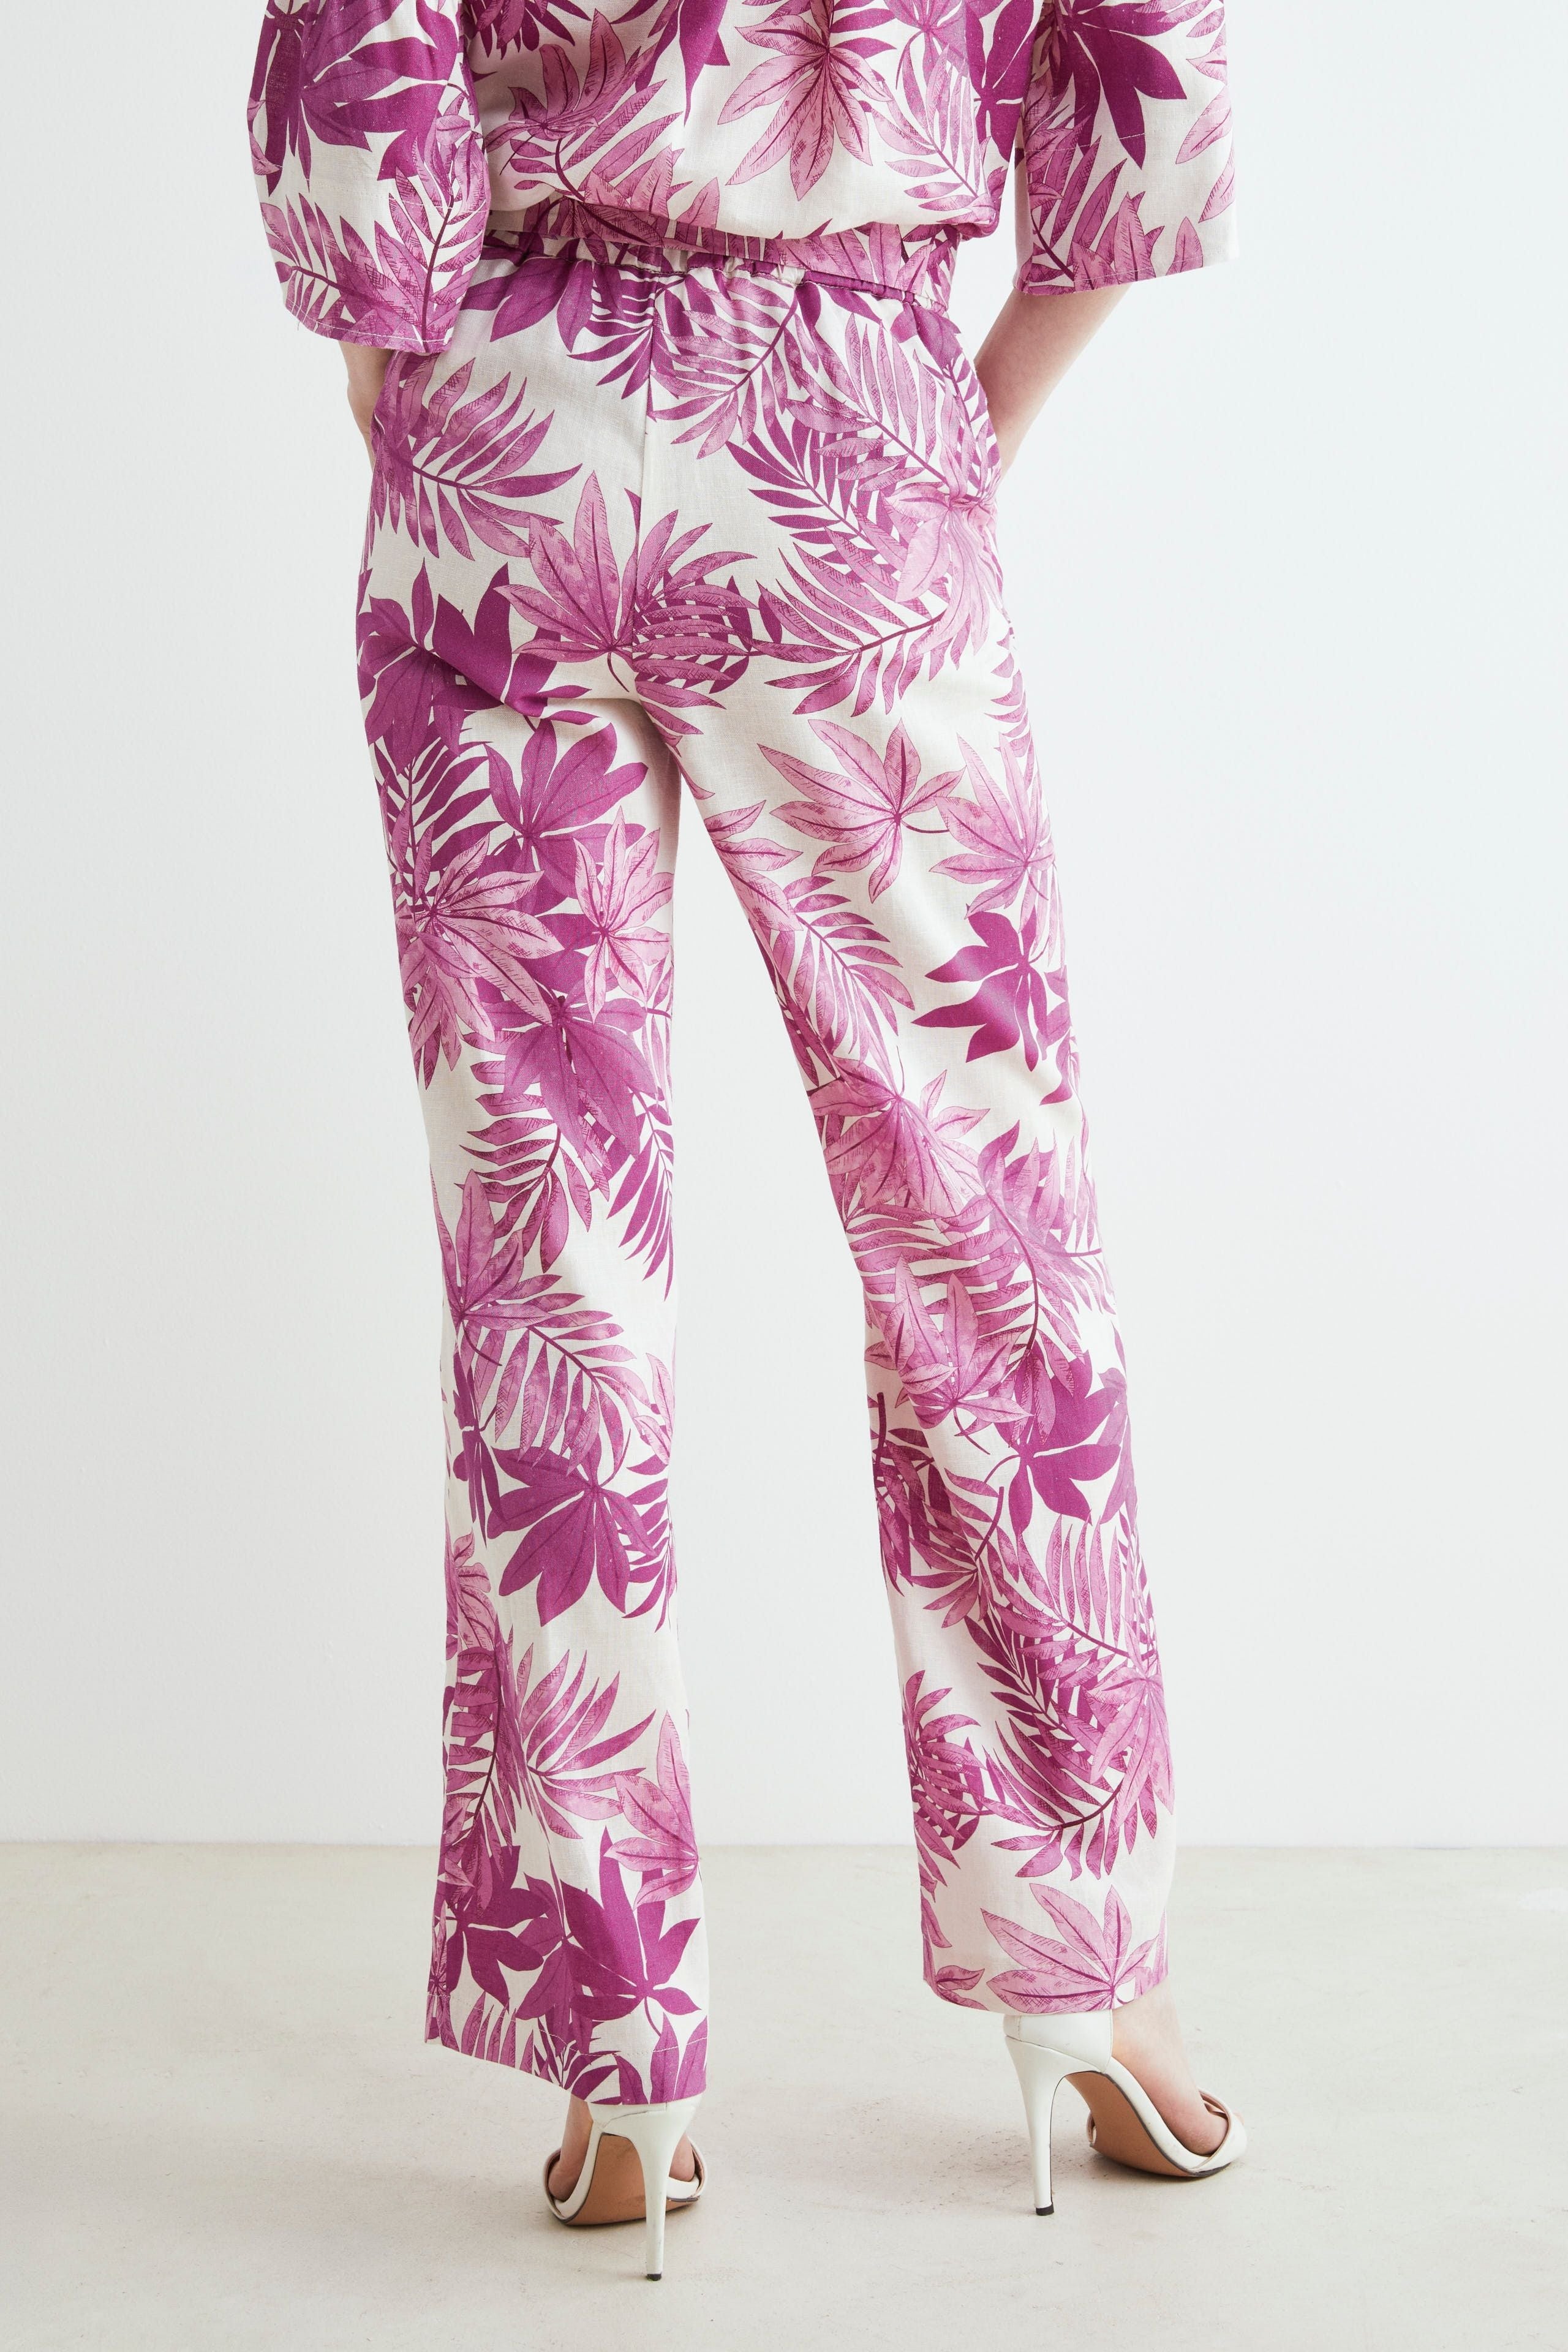 Linen patterned trousers - PINK pattern